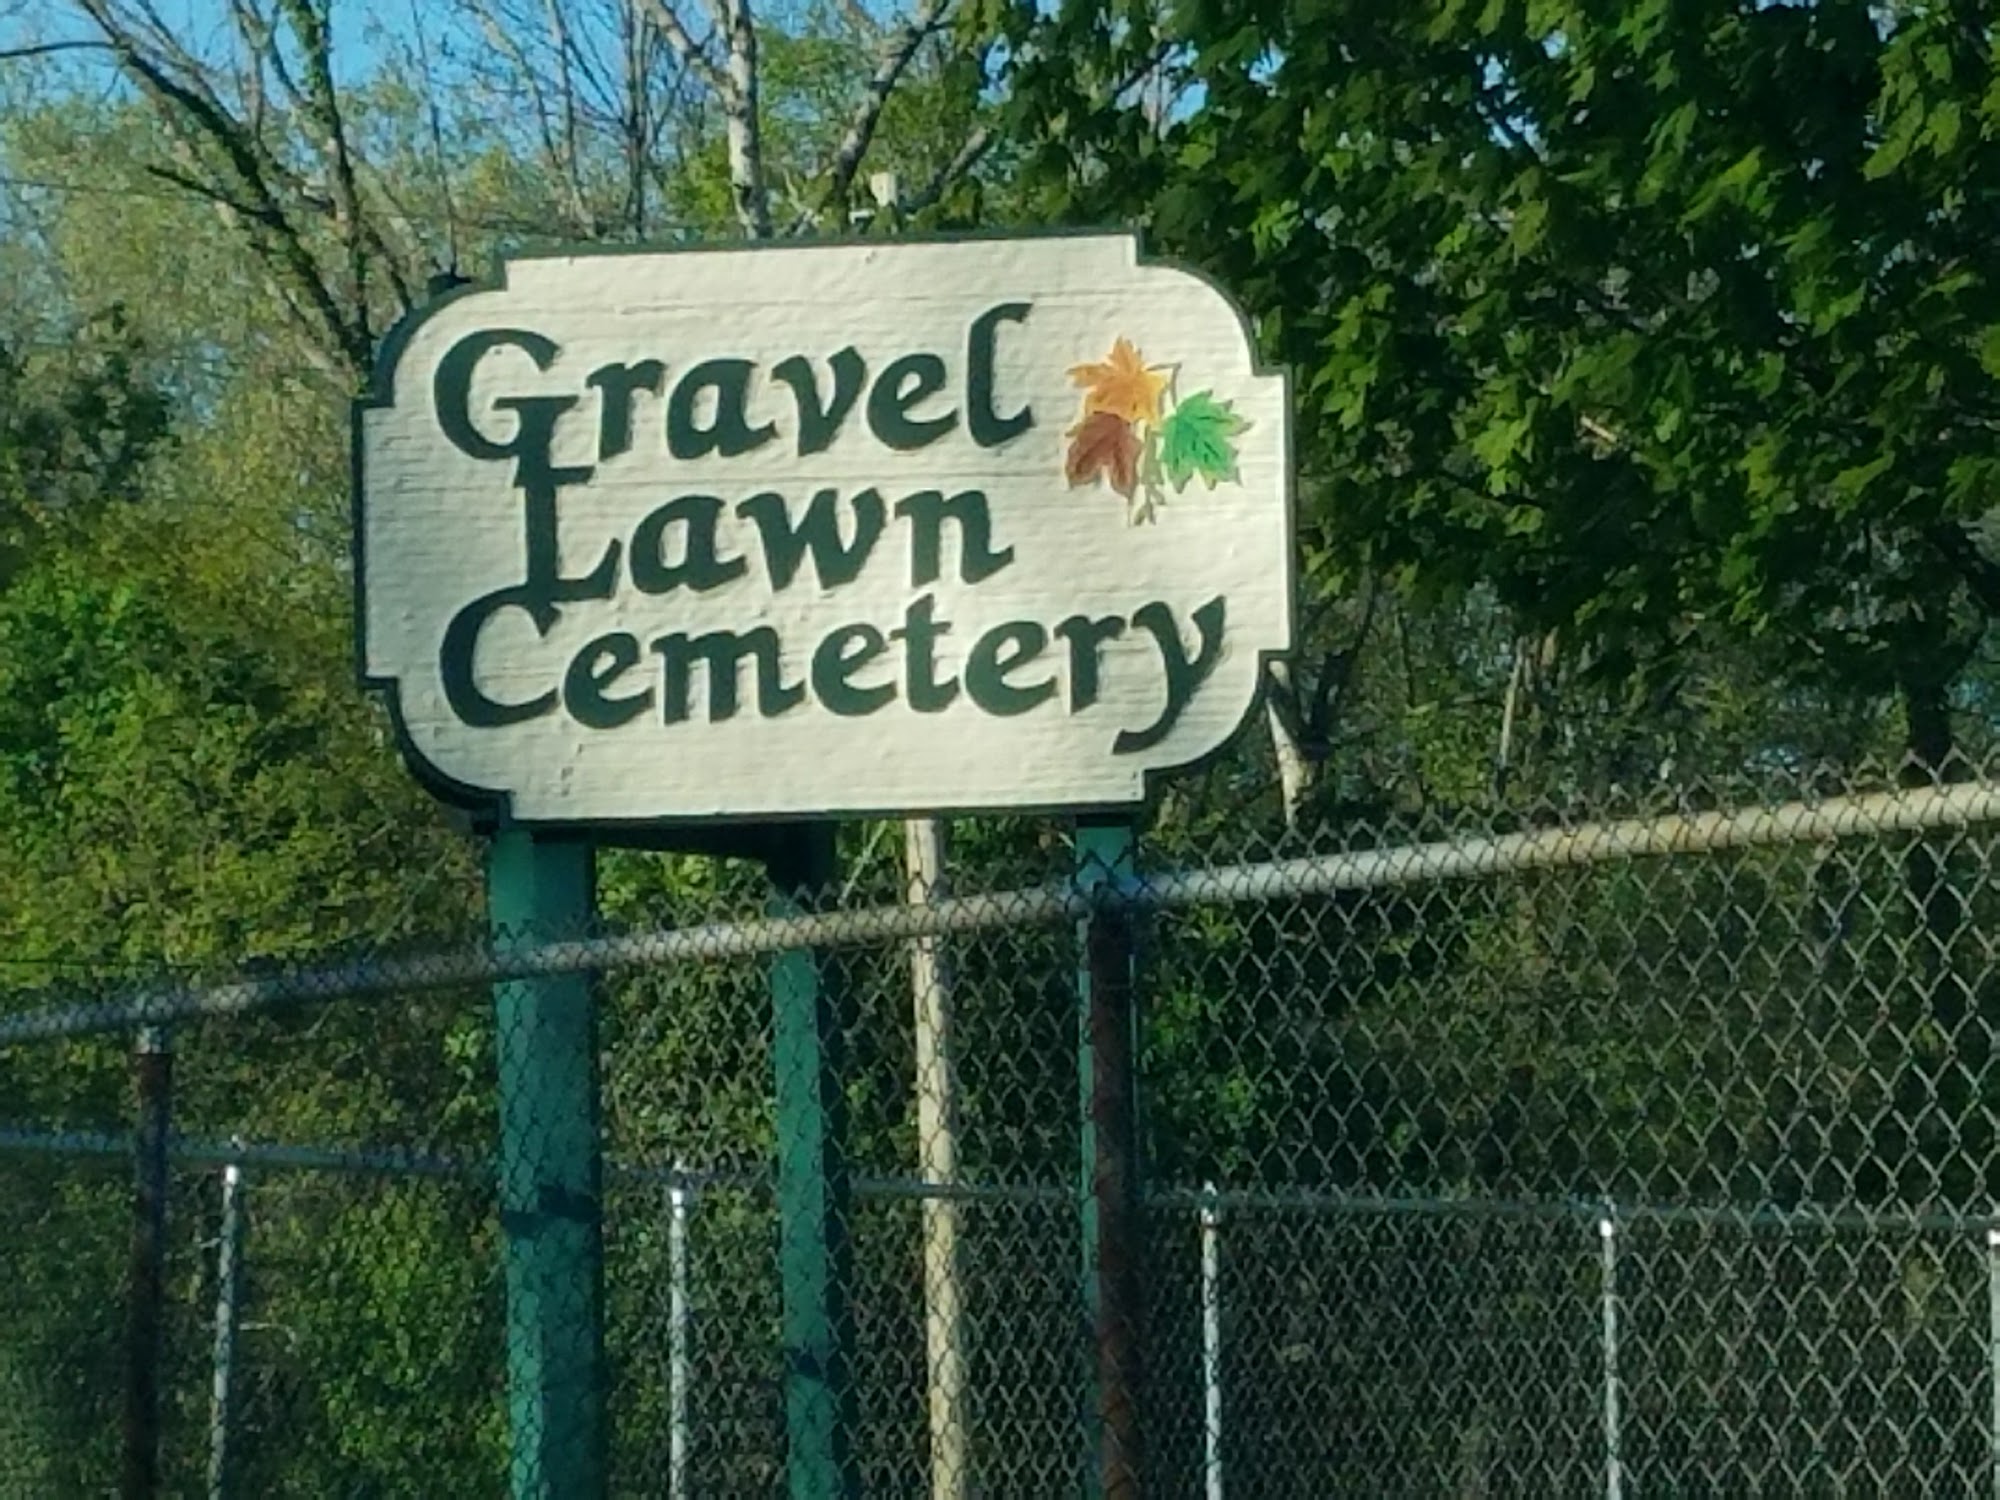 Gravel Lawn Cemetery 9088 1025 S, Fortville Indiana 46040